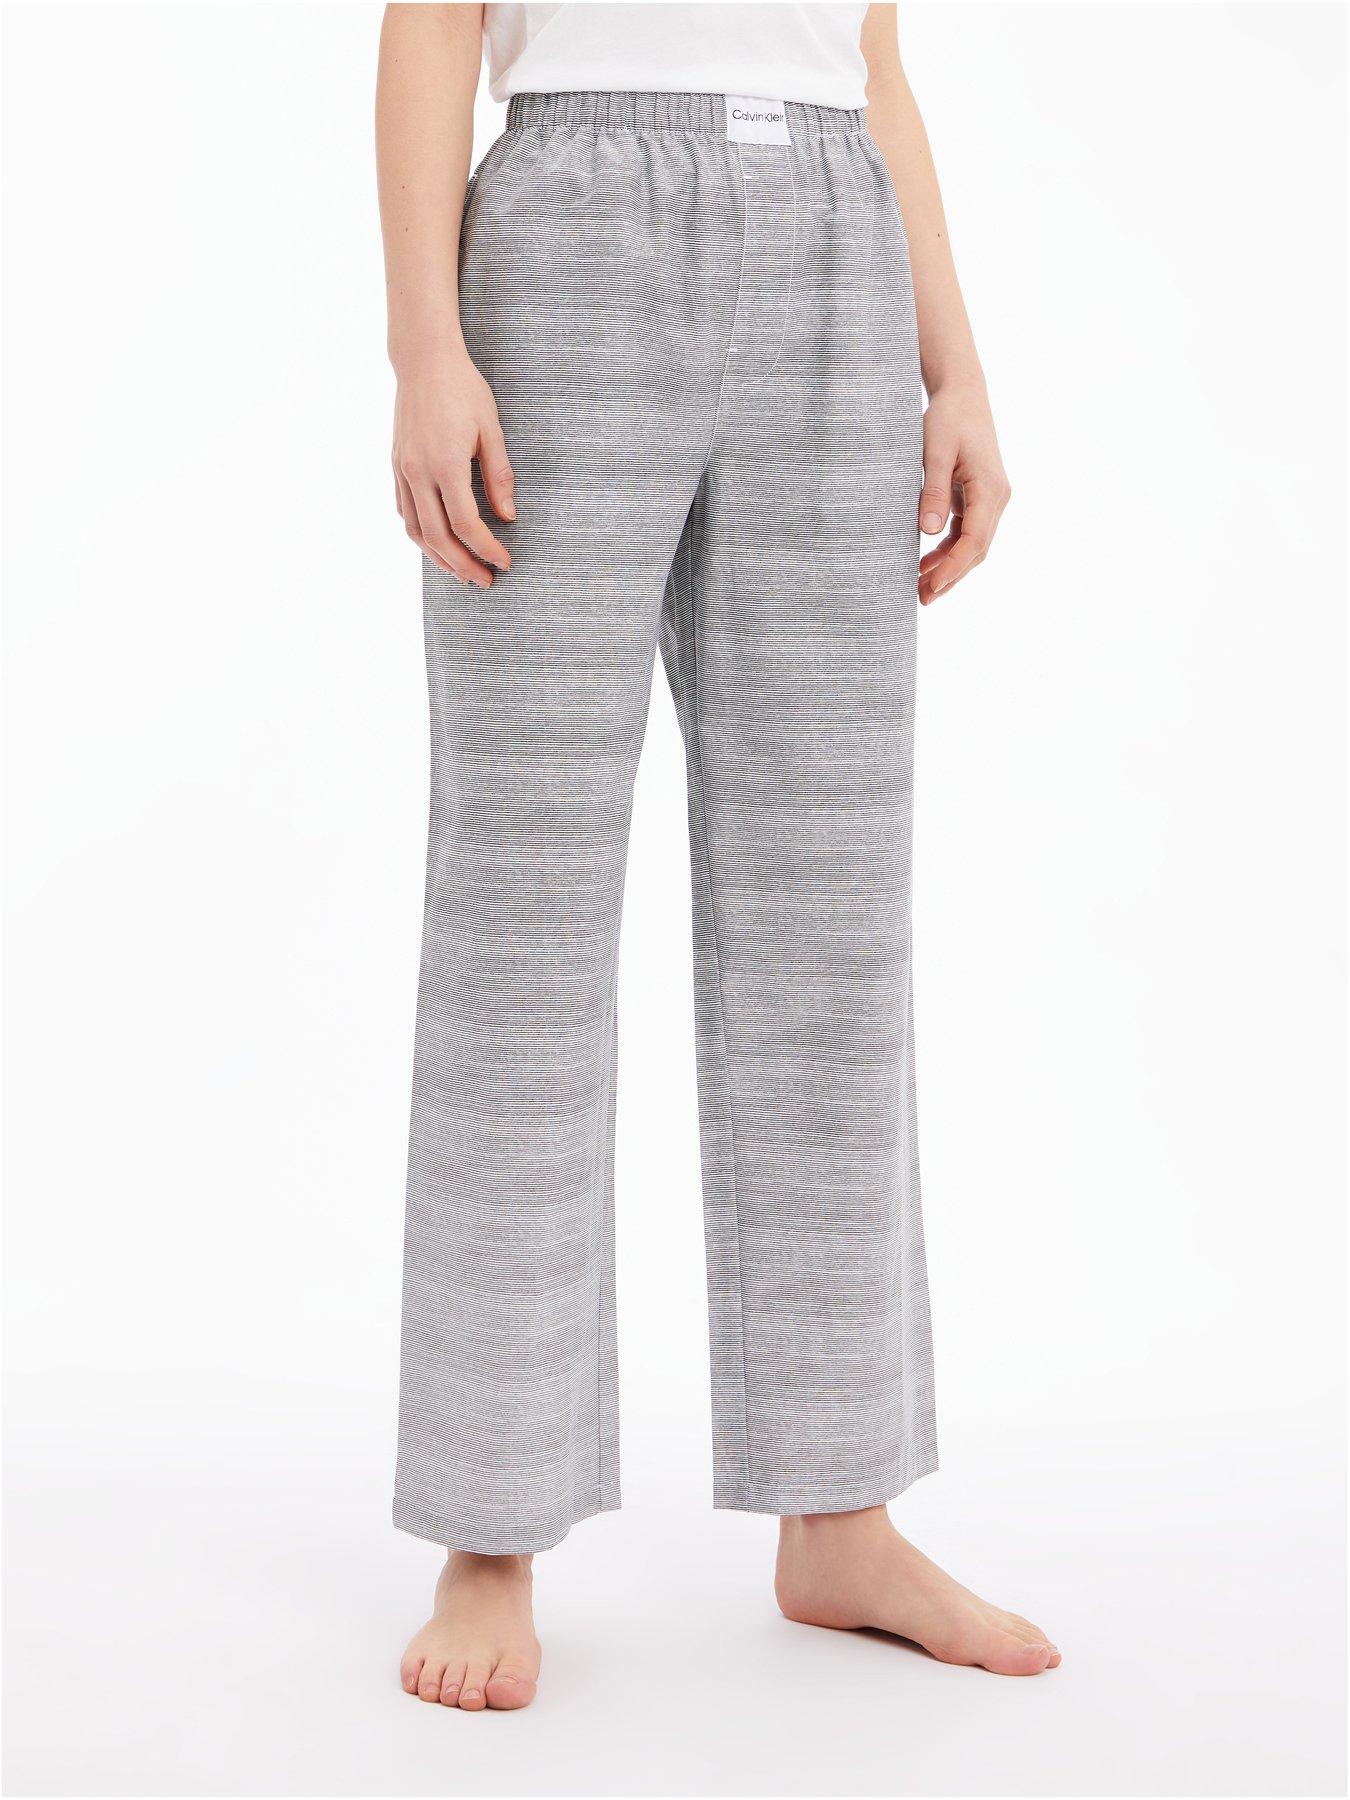 Calvin klein | Pyjamas | Nightwear & loungewear | Women 